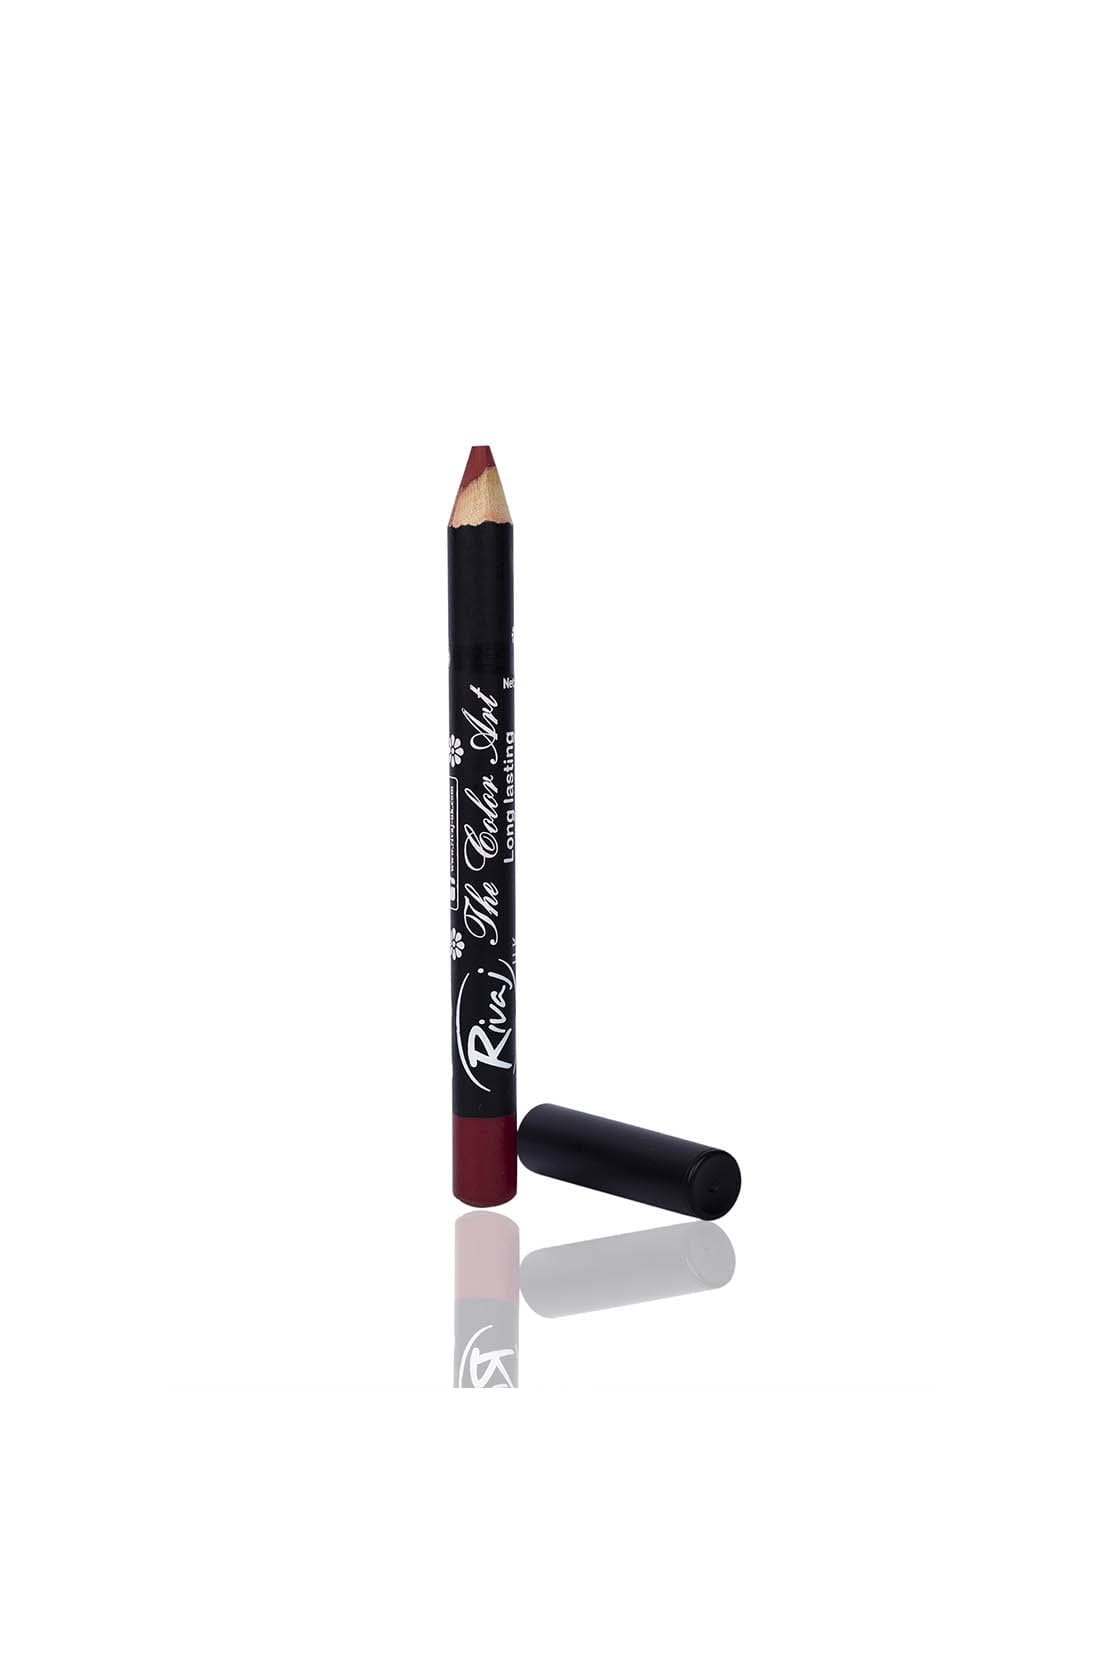 Rivaj UK Cosmetics Lip & Eye Pencil Shade #018 Pink Pearl